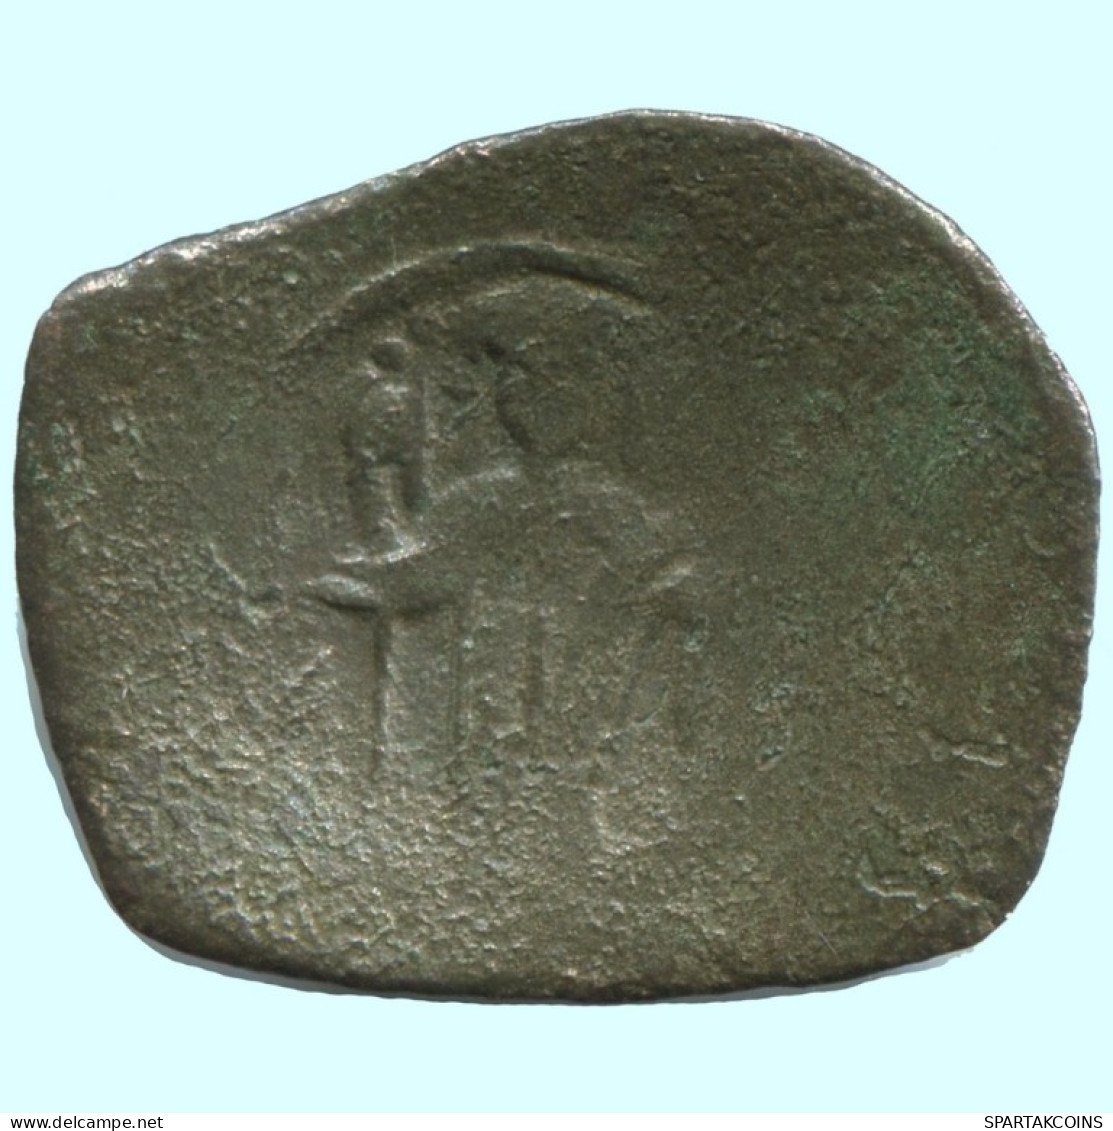 TRACHY BYZANTINISCHE Münze  EMPIRE Antike Authentisch Münze 1g/19mm #AG642.4.D.A - Bizantinas